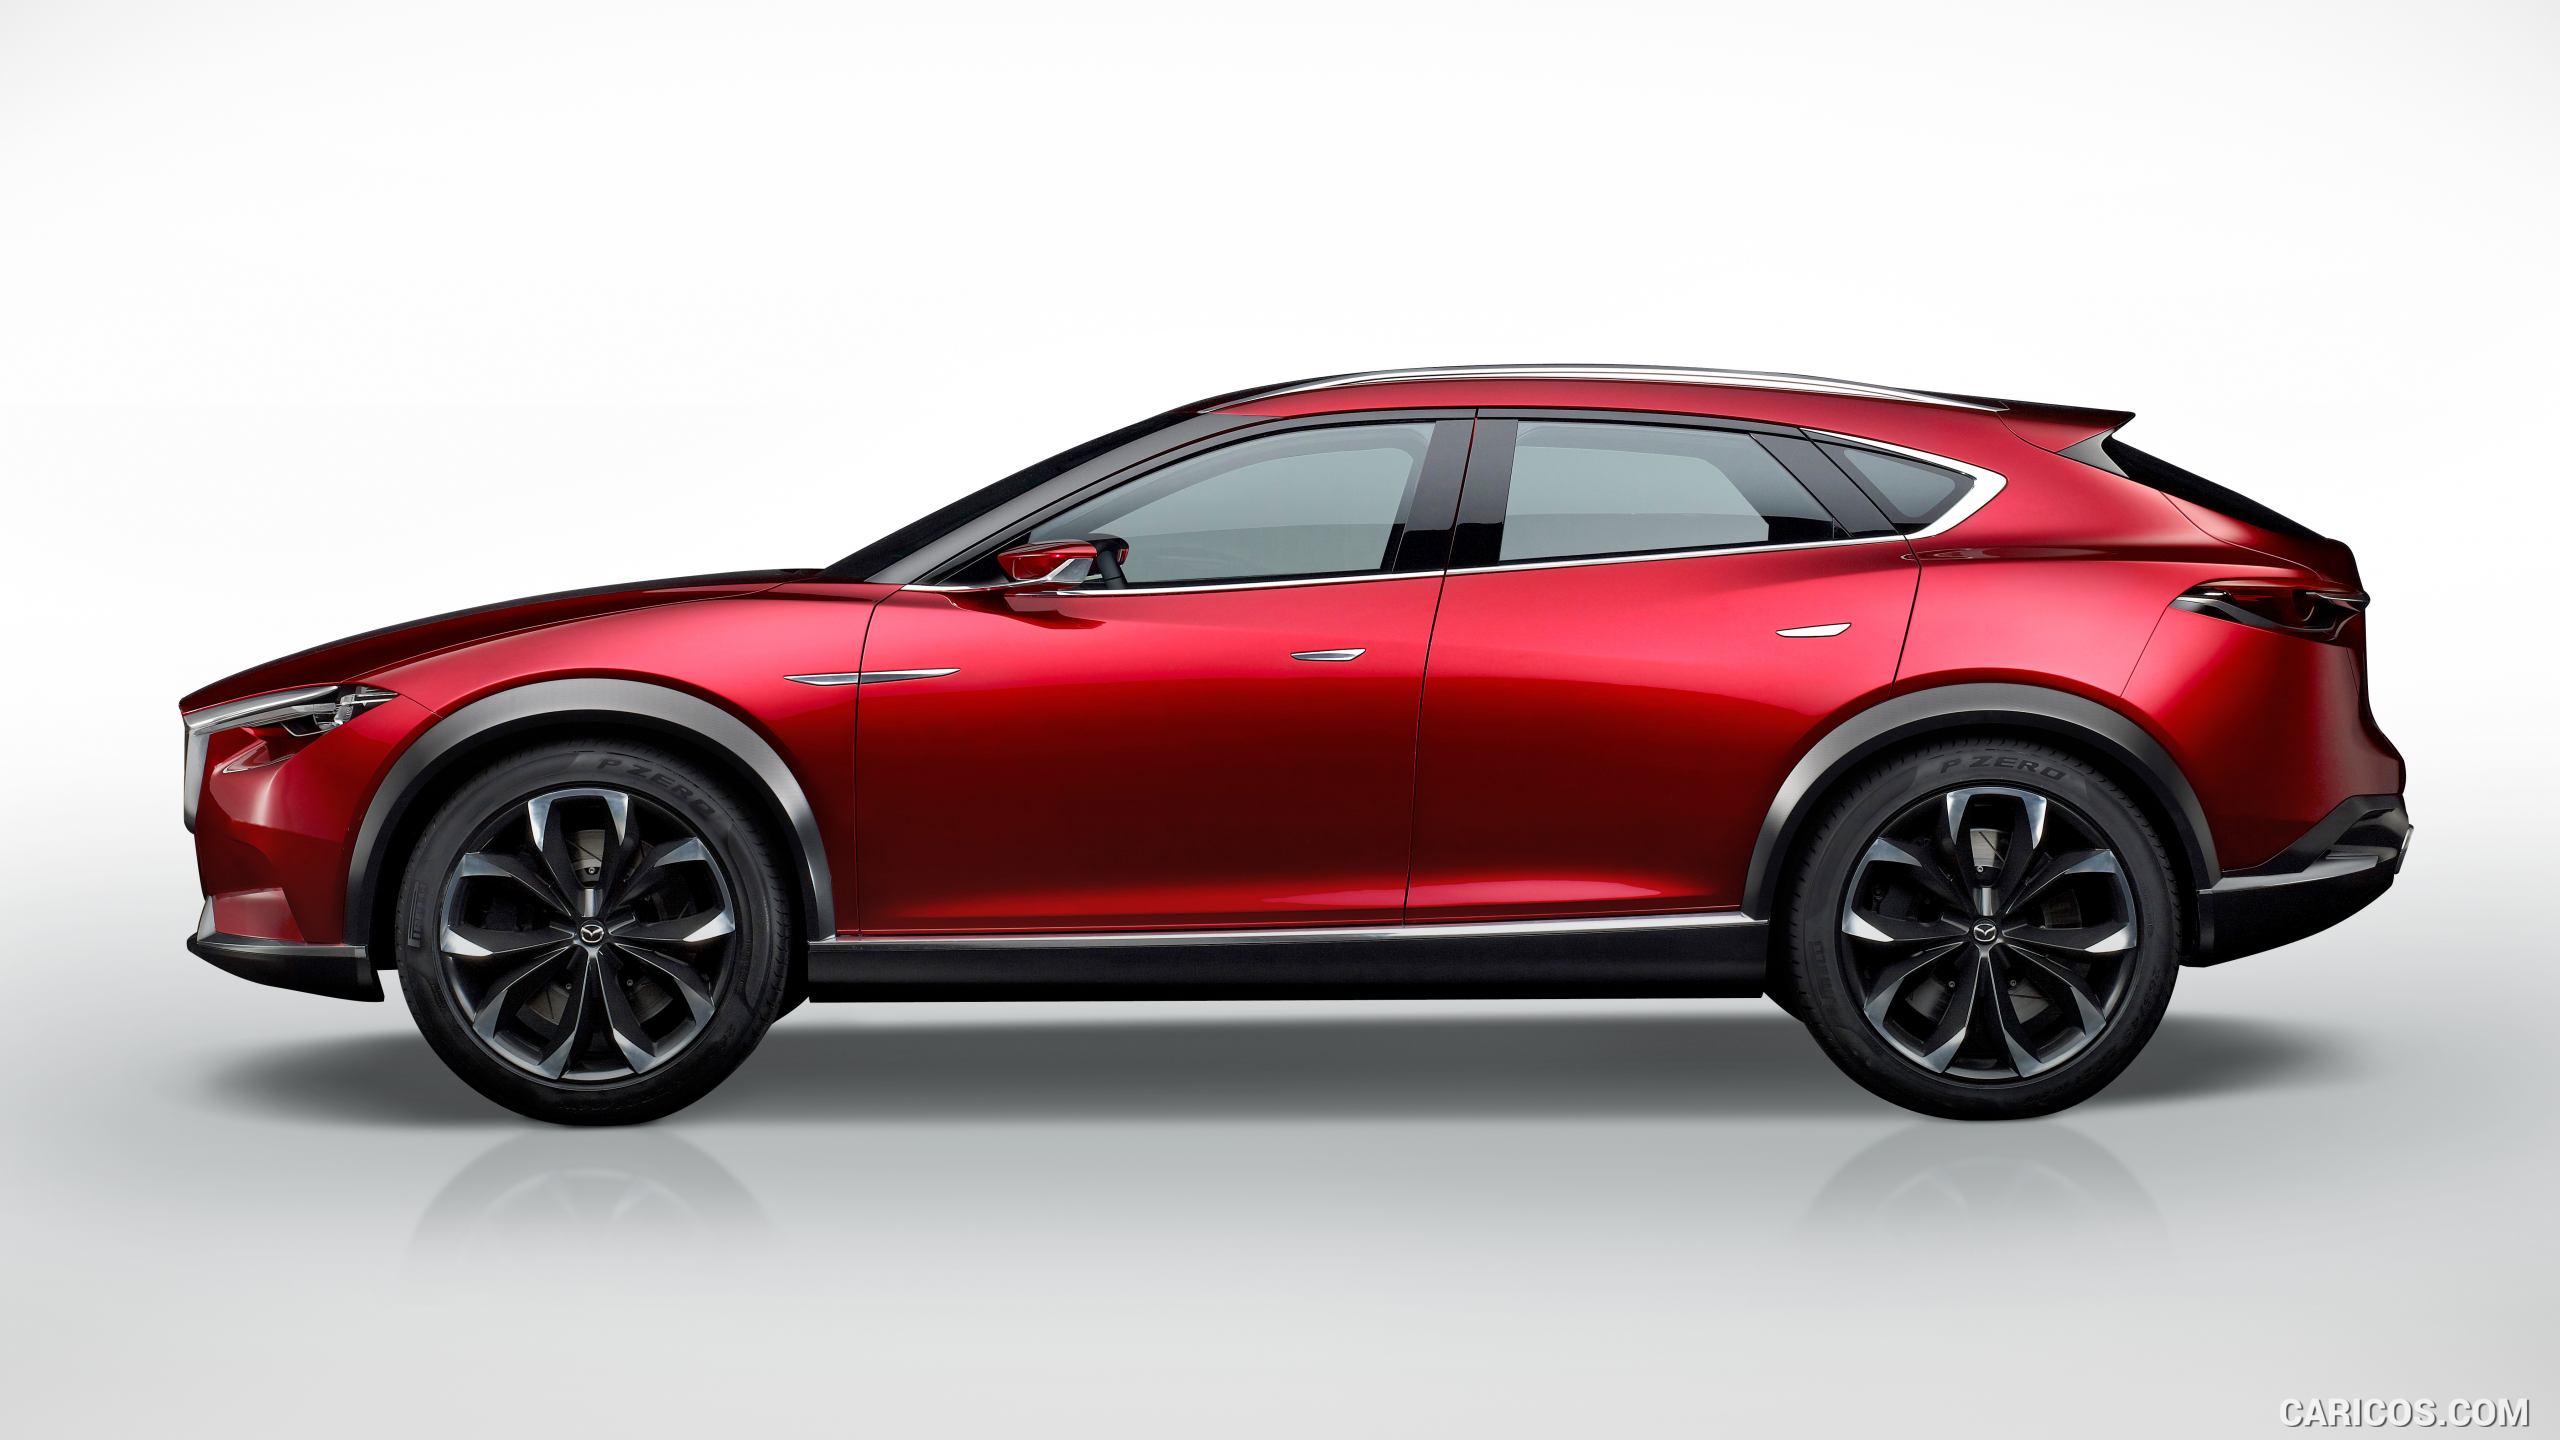 2015 Mazda Koeru Crossover Concept - Side, #4 of 17